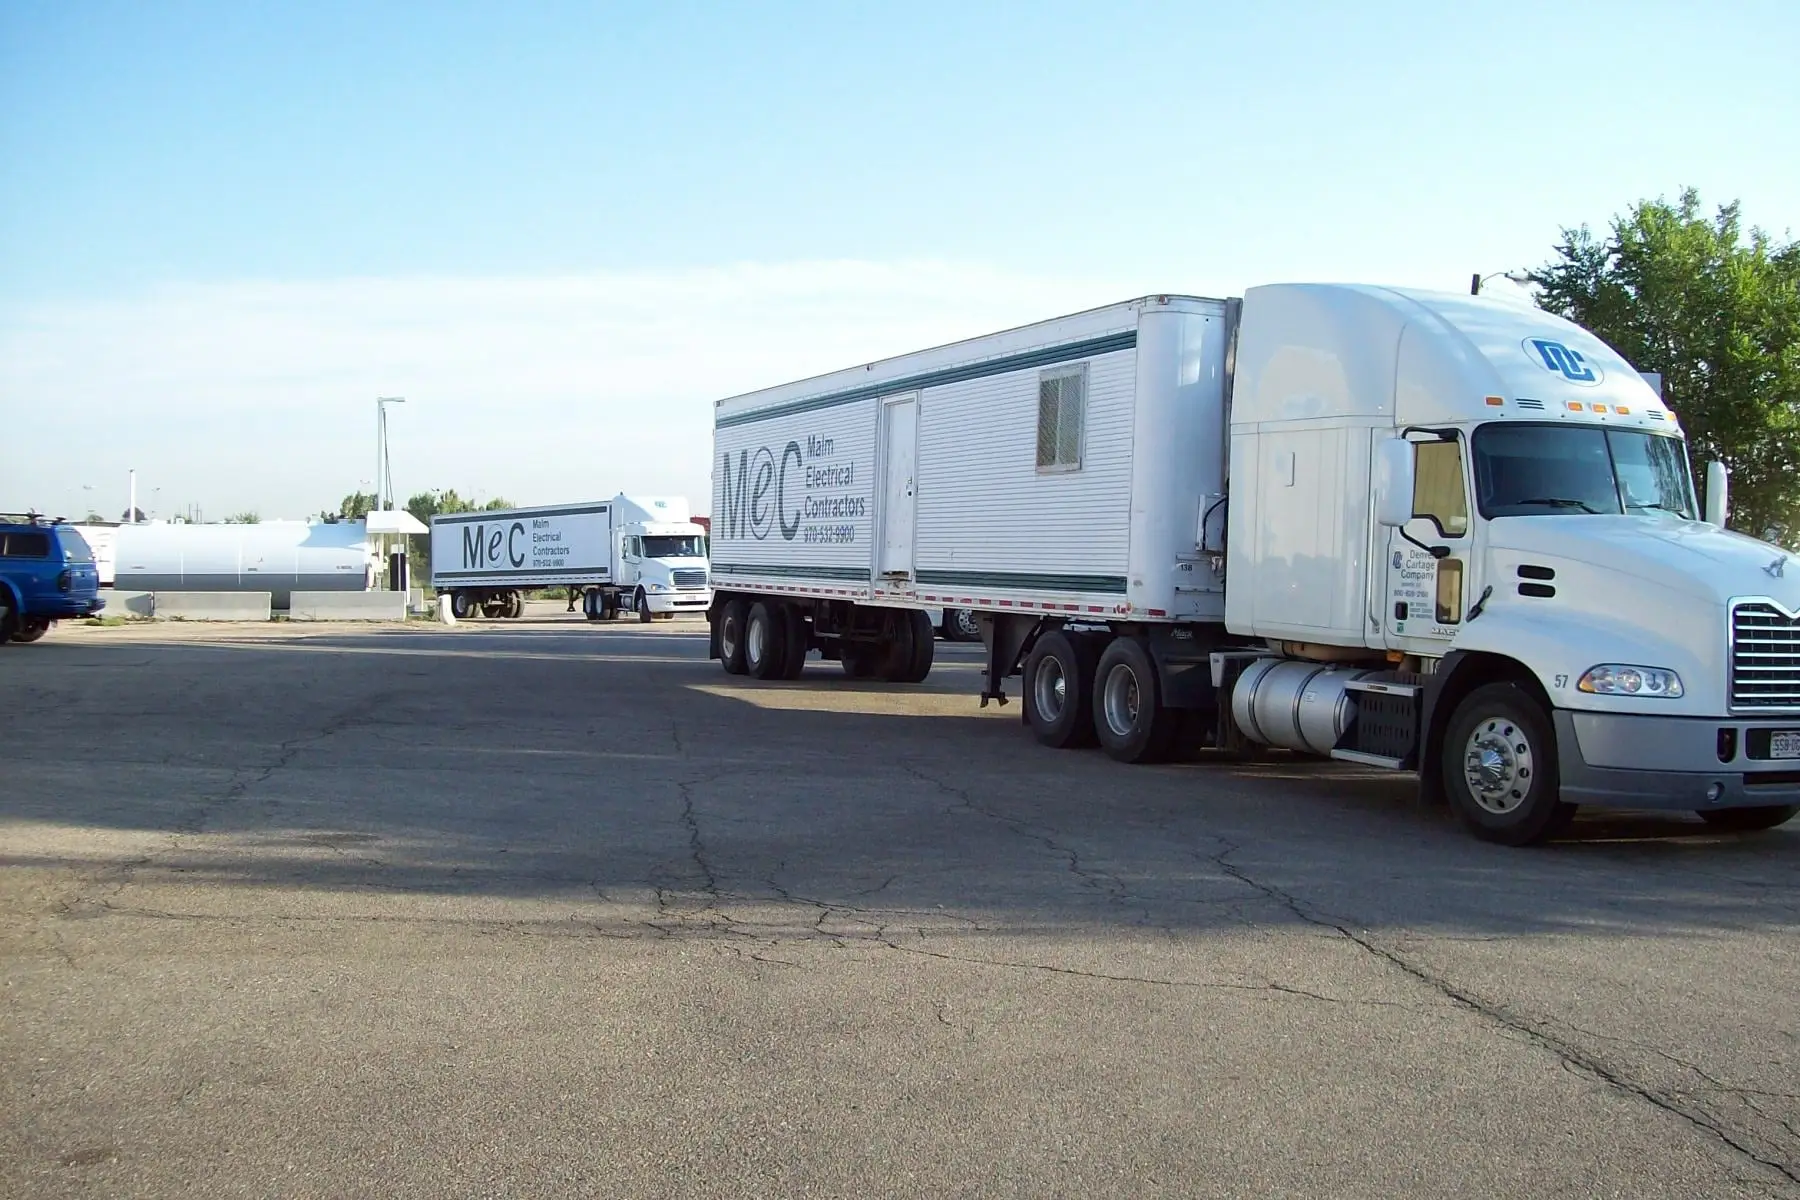 Two white trailer trucks